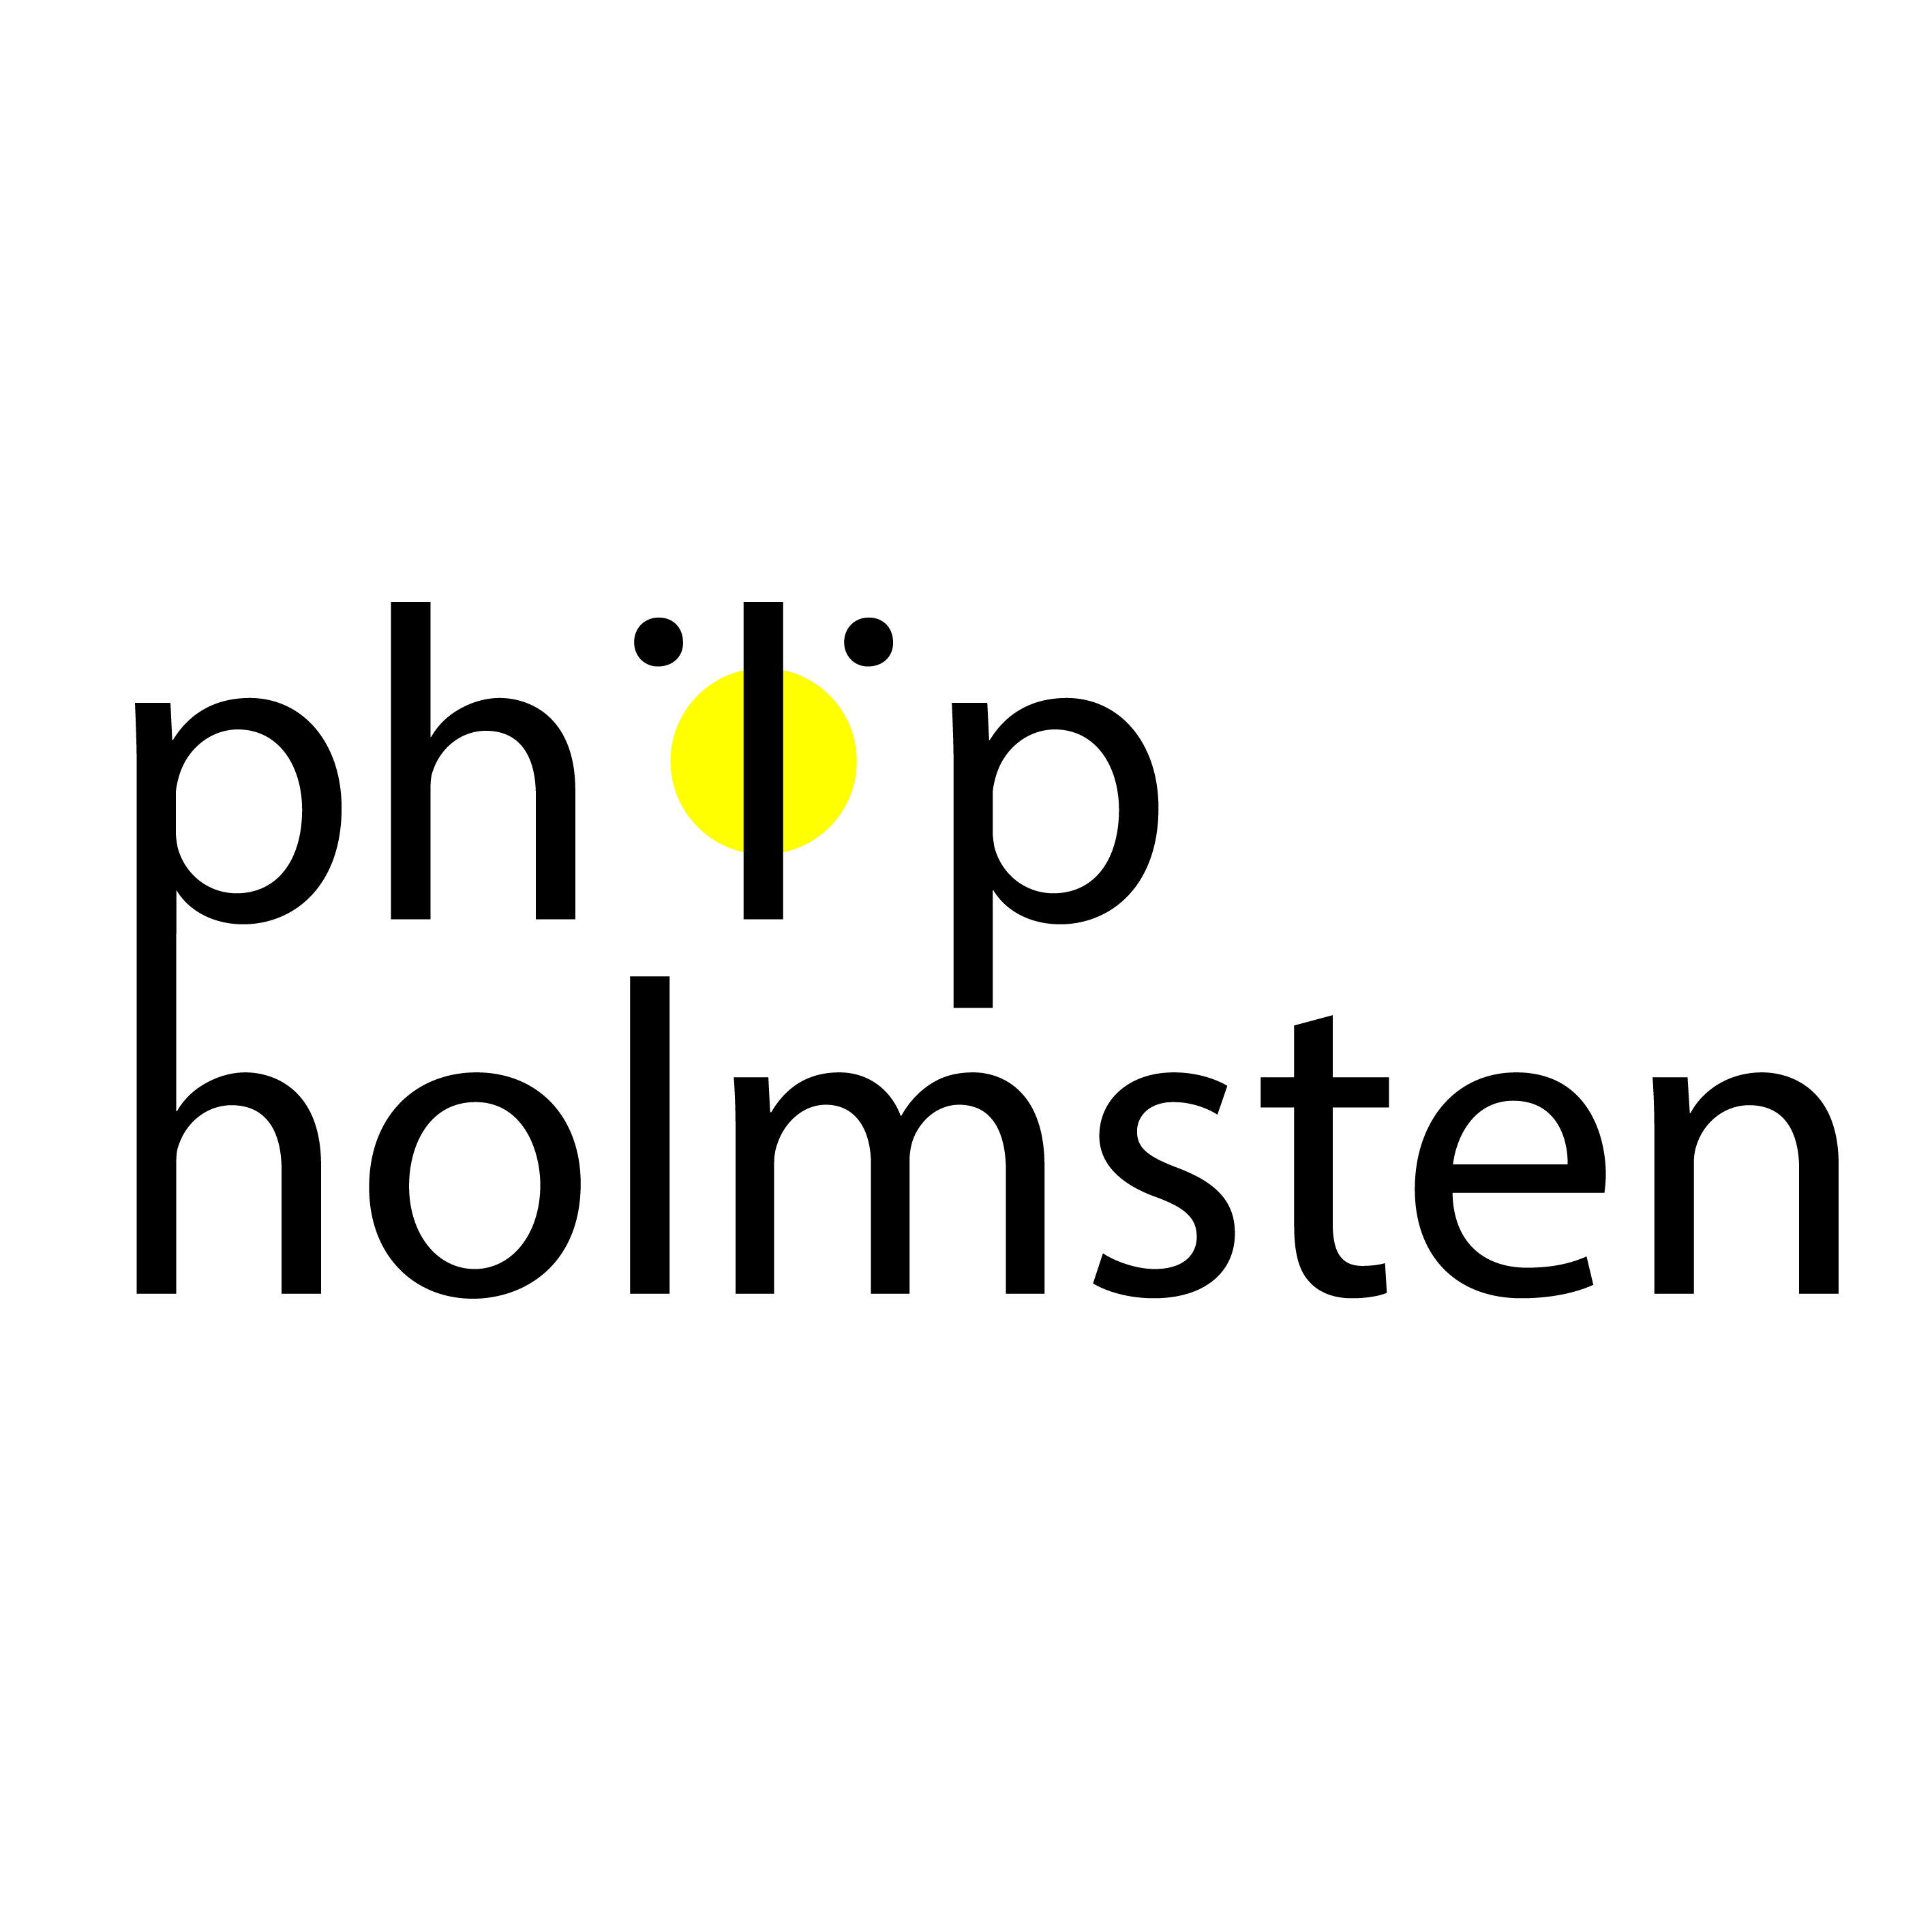 Philip Holmsten